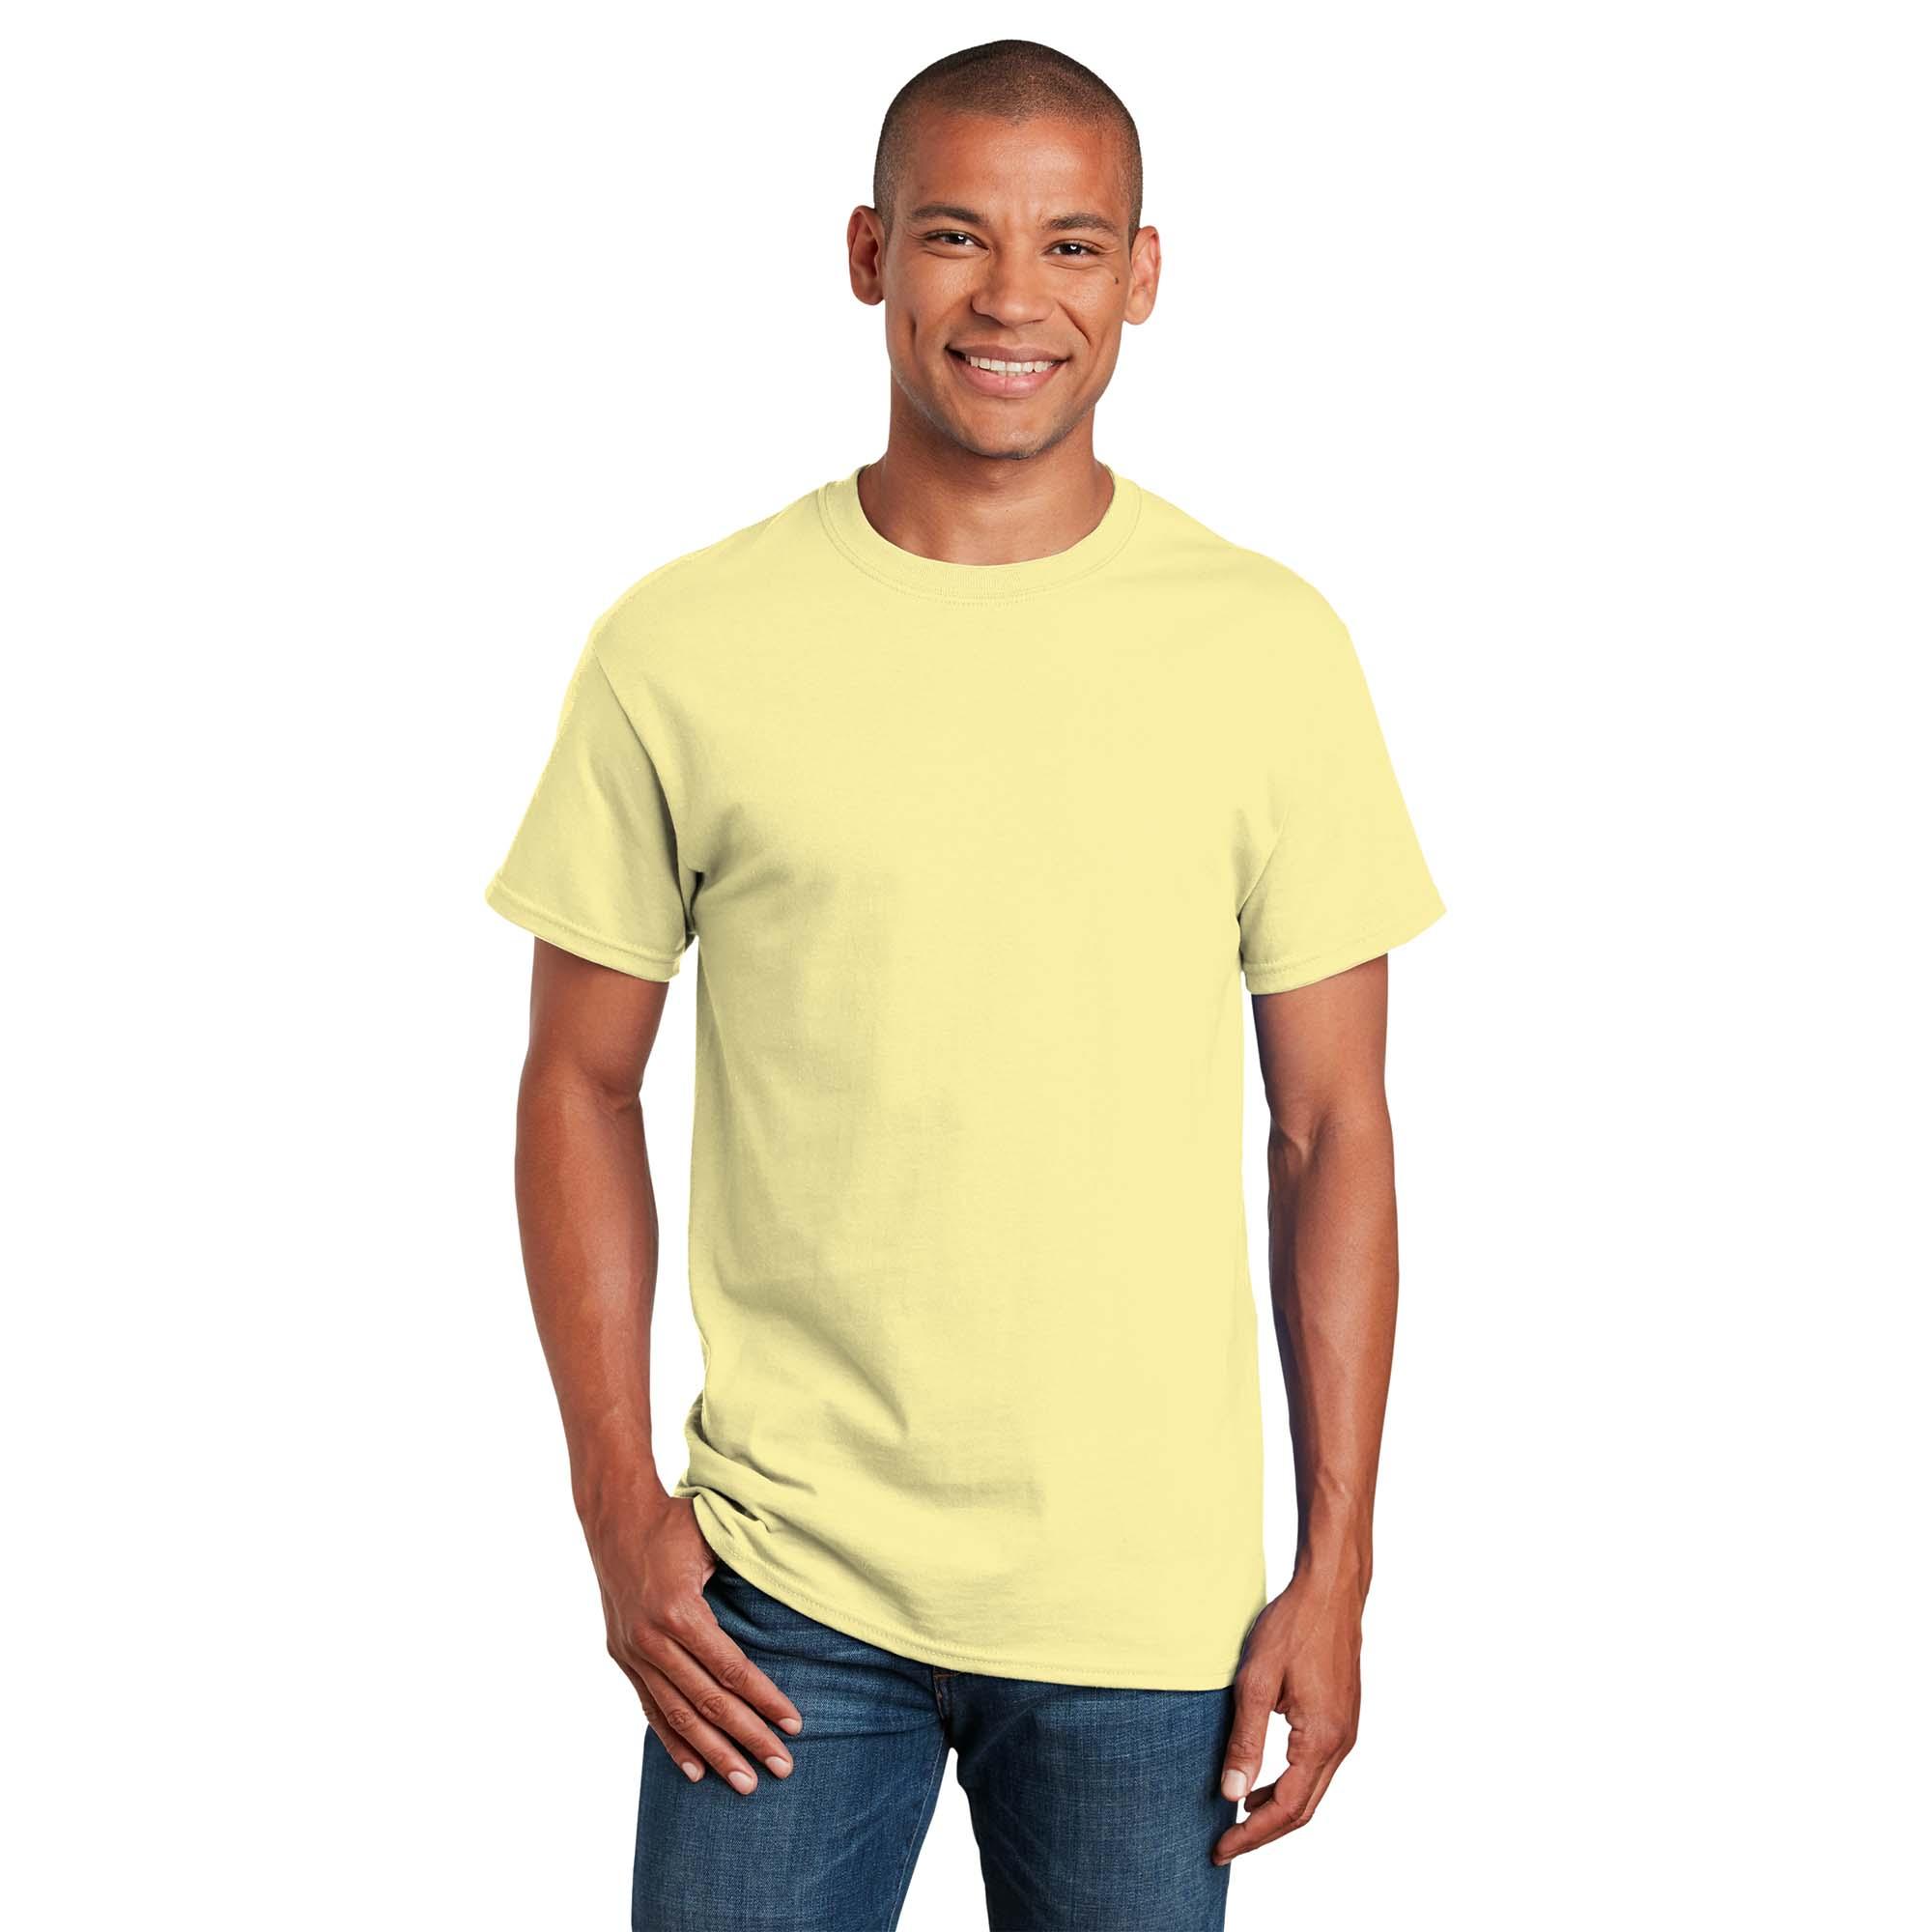 Team Realtree mens T-shirt black Yellow logo 100% cotton short sleeve M Medium 